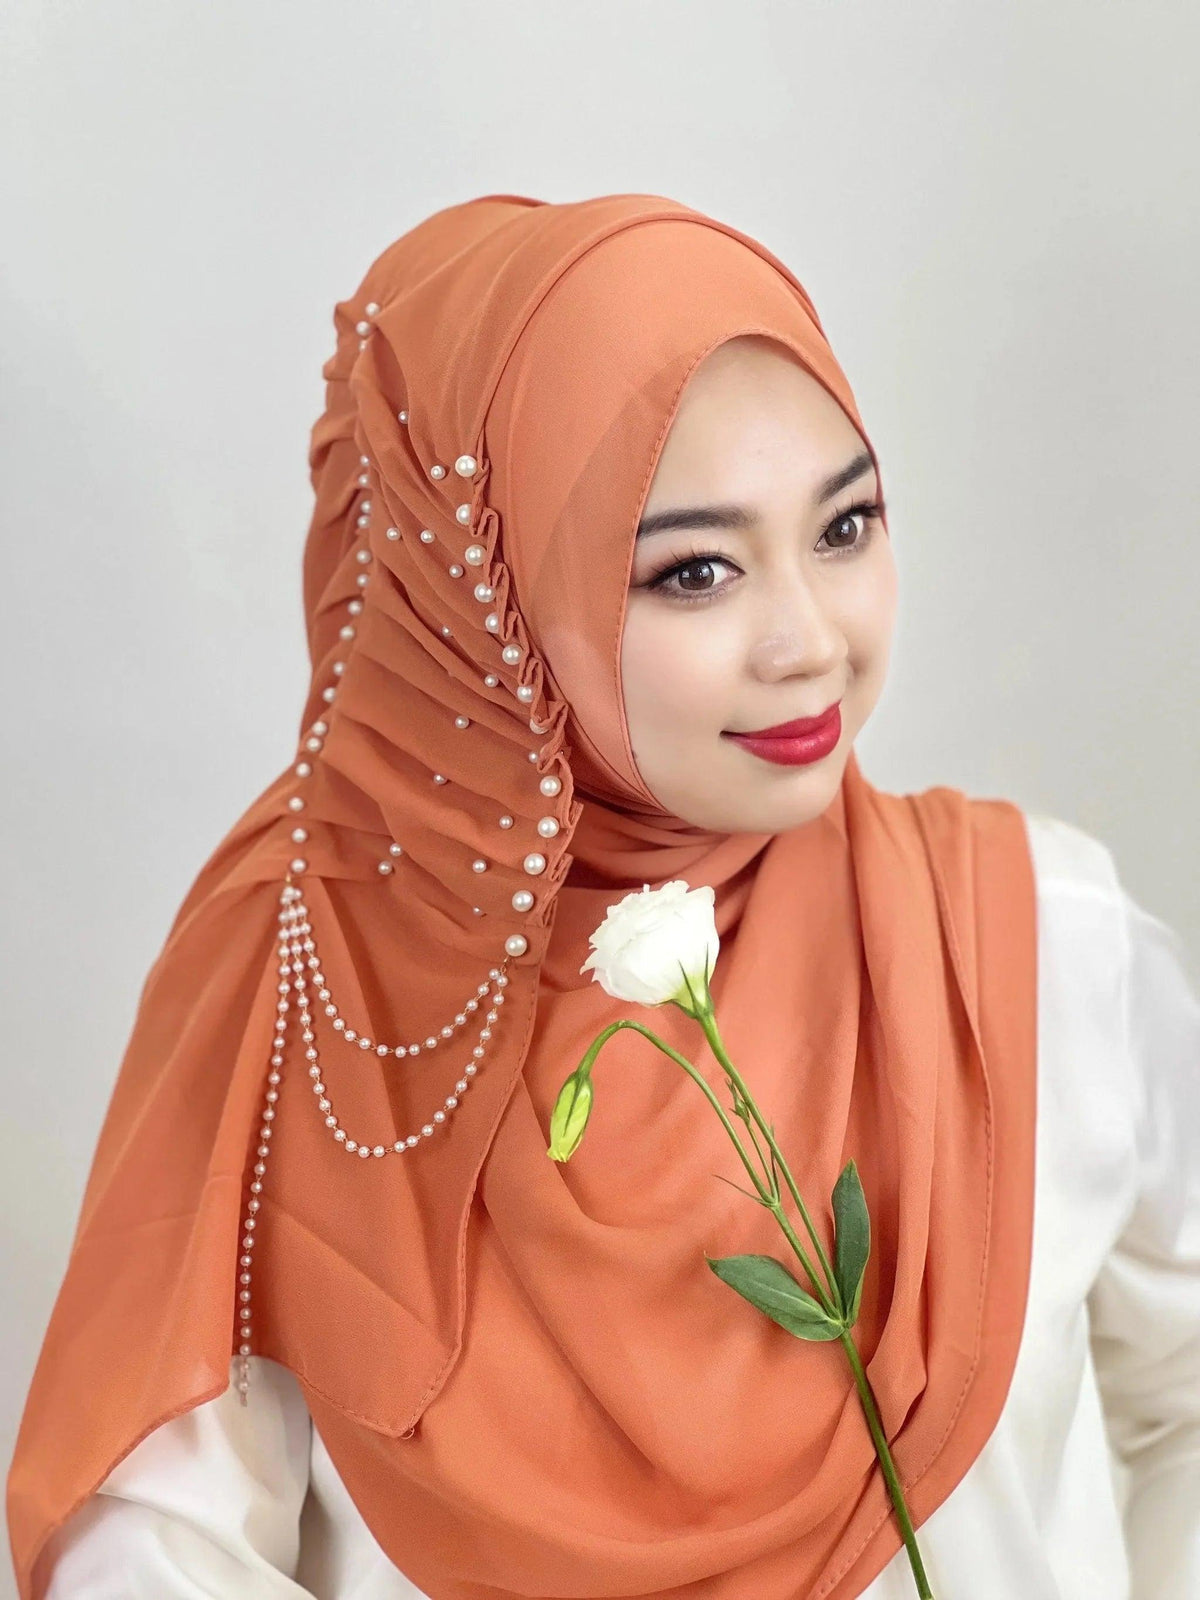 On sale - Women Hijab Shiny - 8 Colours - Free shipping -